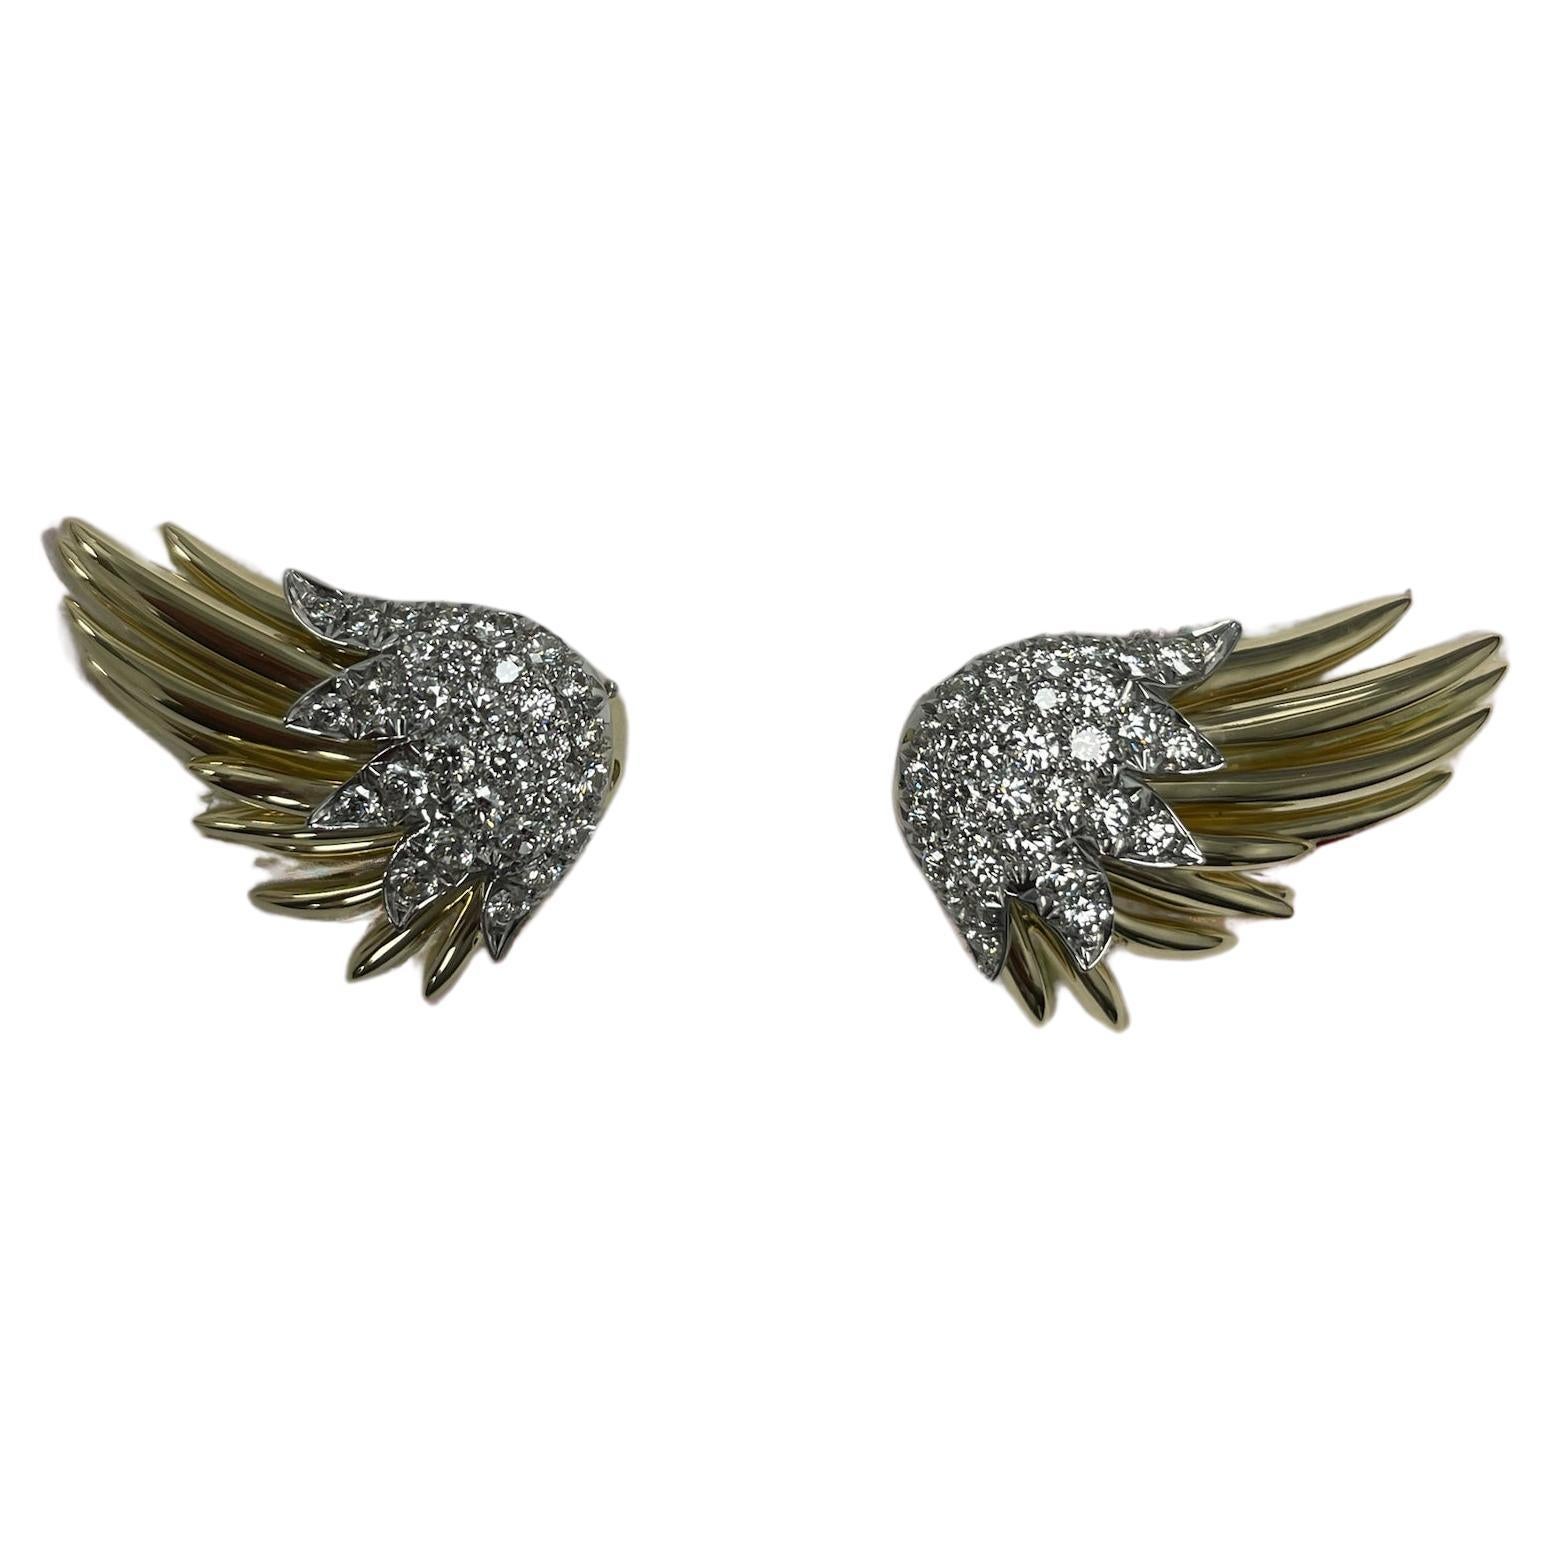 TIFFANY & CO. SCHLUMBERGER Large Paris Flame Diamond Earrings